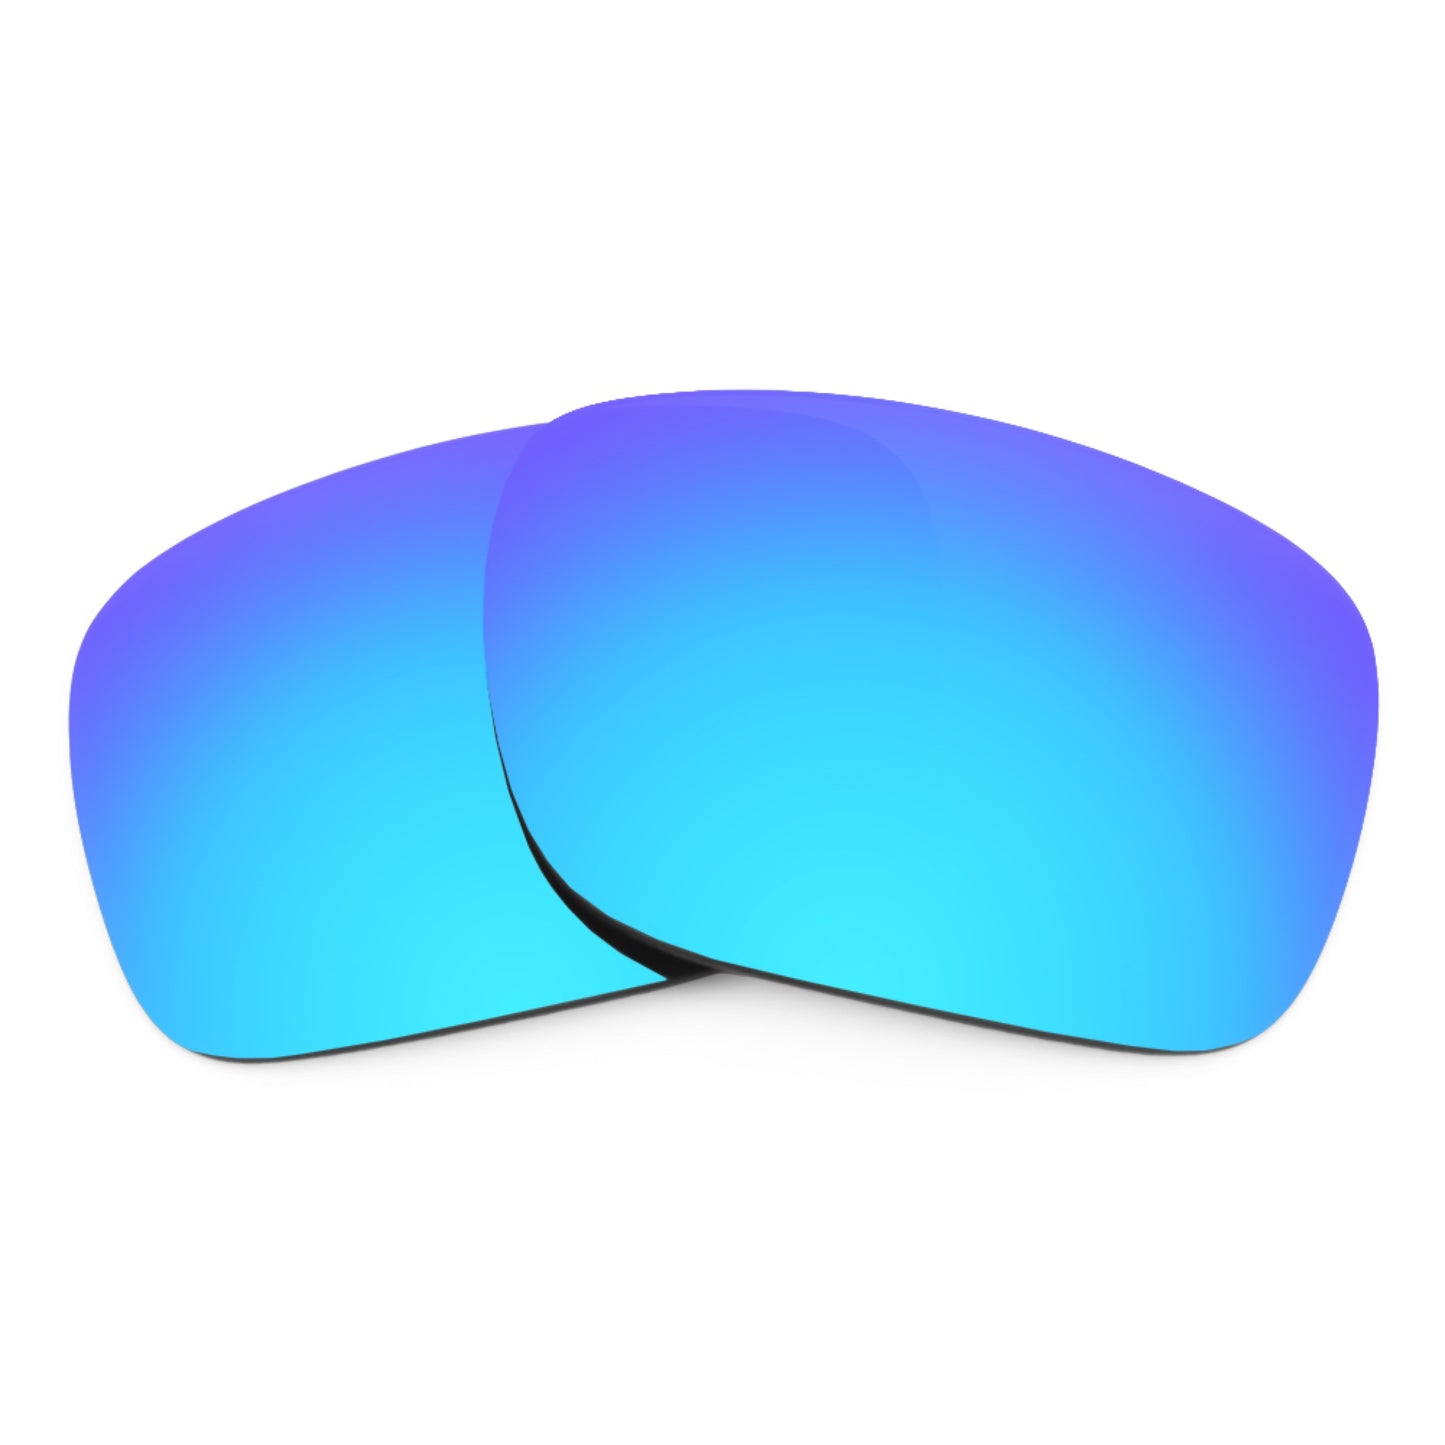 Revant replacement lenses for Prada SPR 21R Non-Polarized Ice Blue